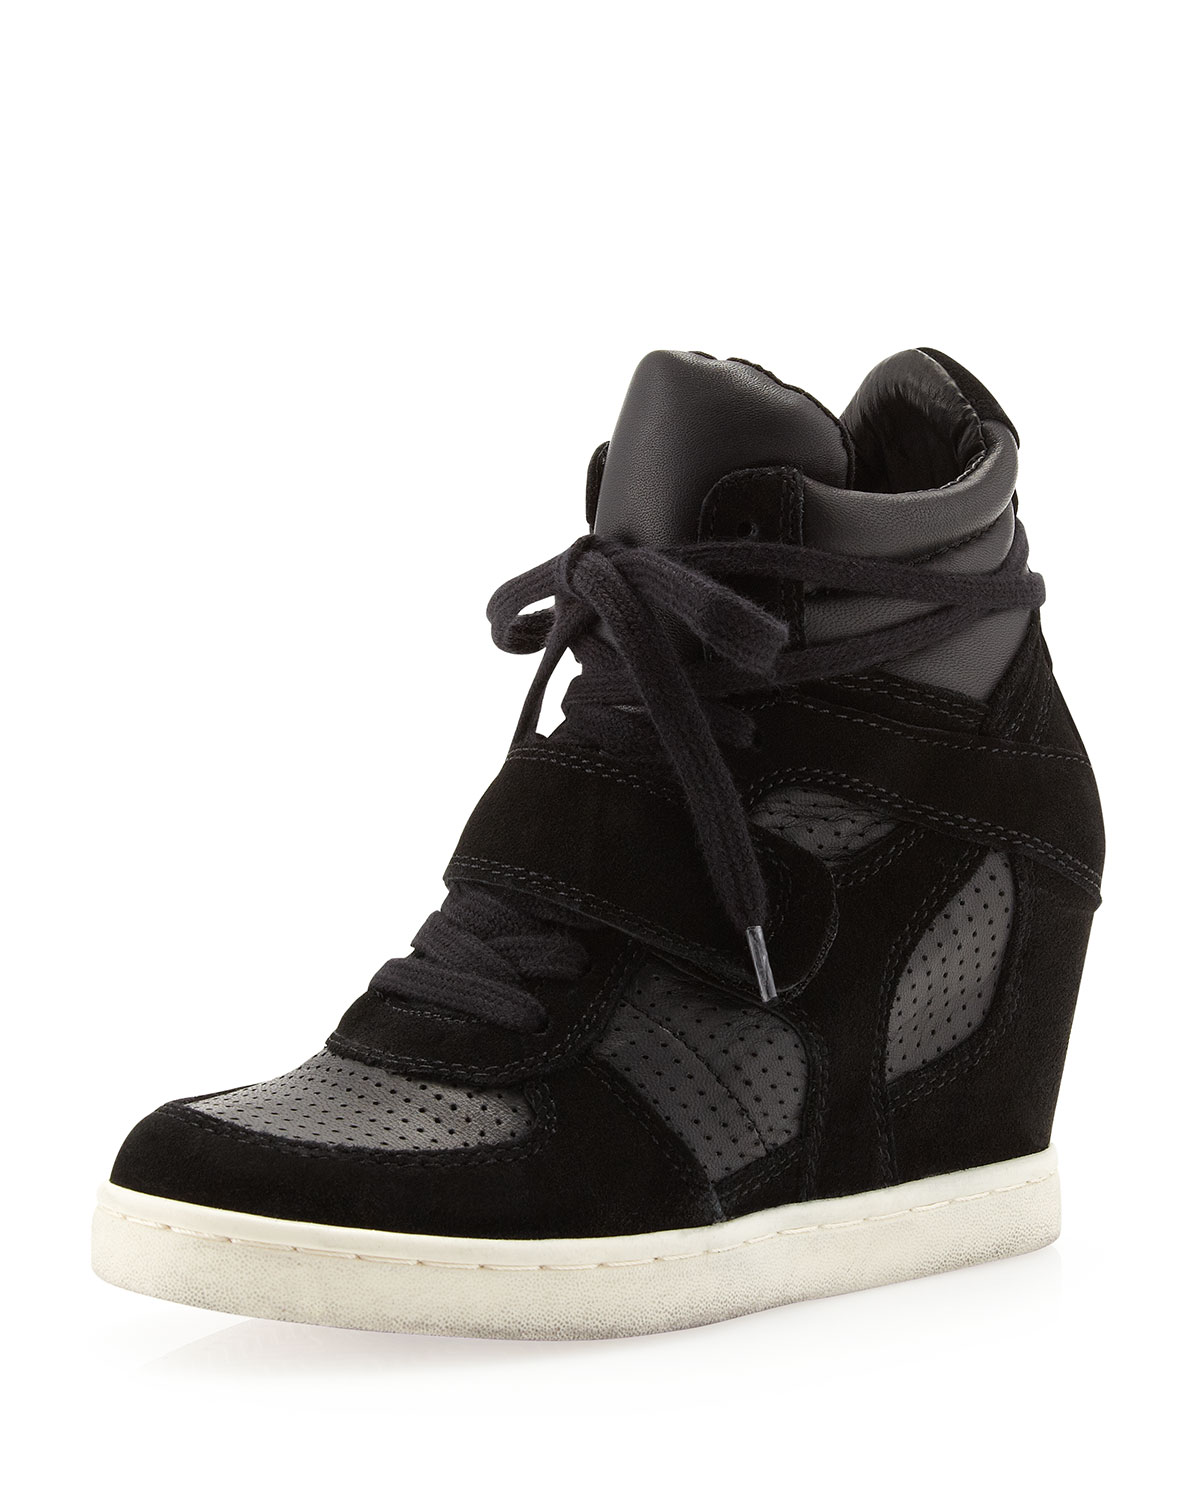 Lyst - Ash Cool Suede Wedge Sneaker Black in Gray